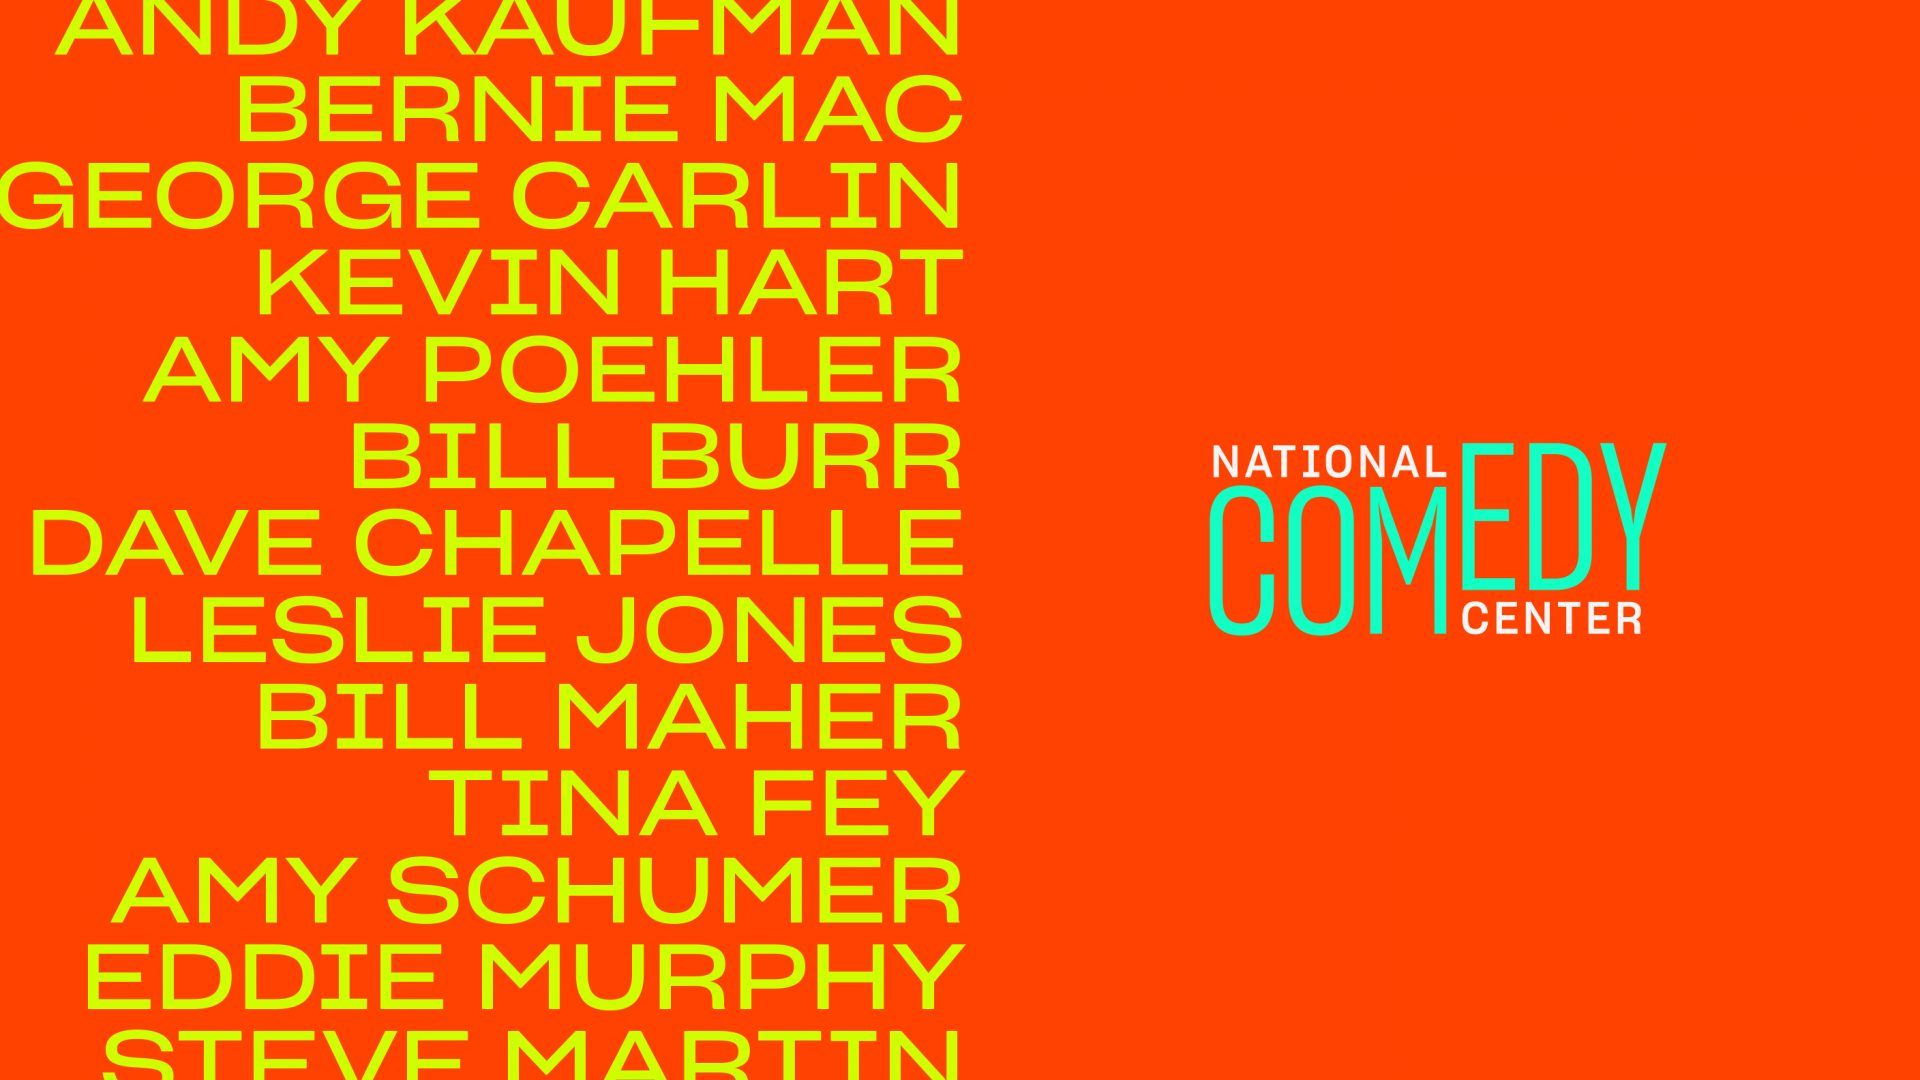 National Comedy Center campaign names